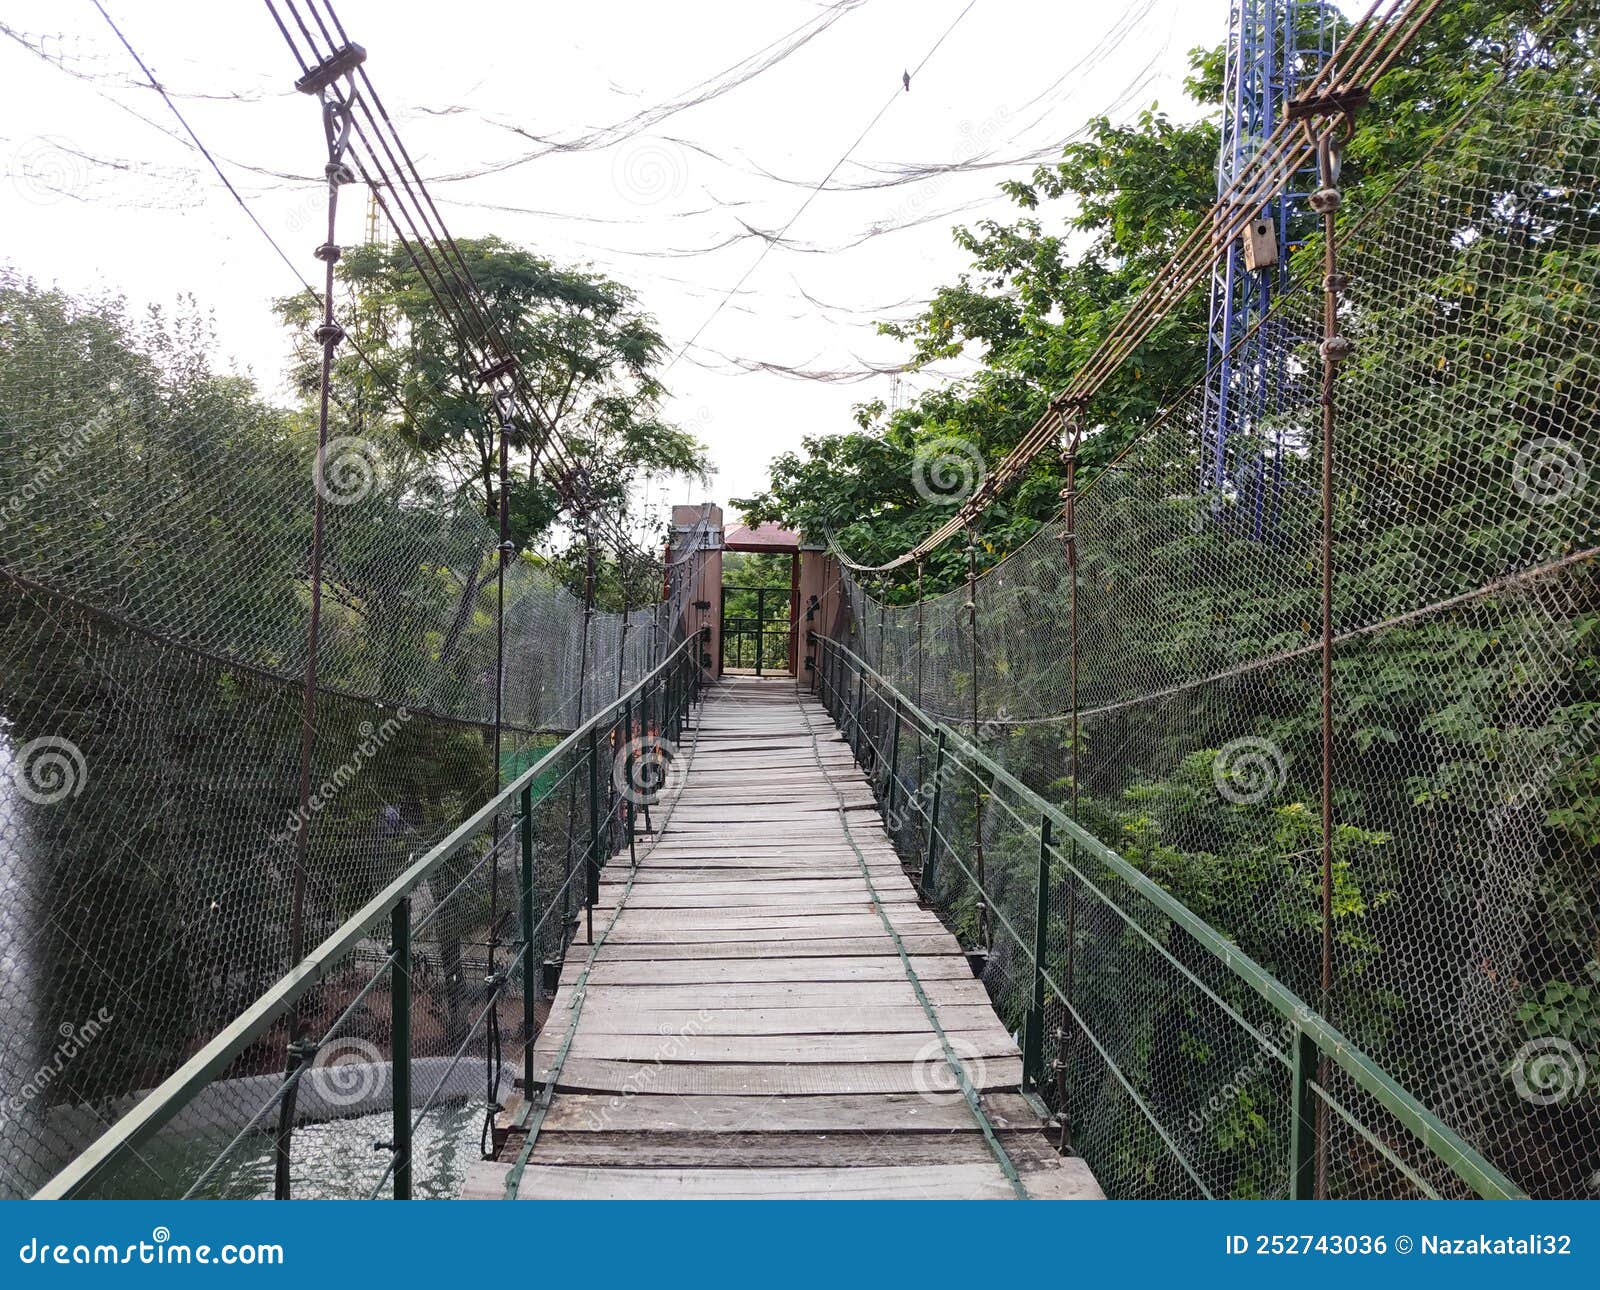 https://thumbs.dreamstime.com/z/adventurous-wooden-bridge-net-along-sides-green-trees-amazing-view-wooden-scary-bridge-tourists-adventurous-252743036.jpg